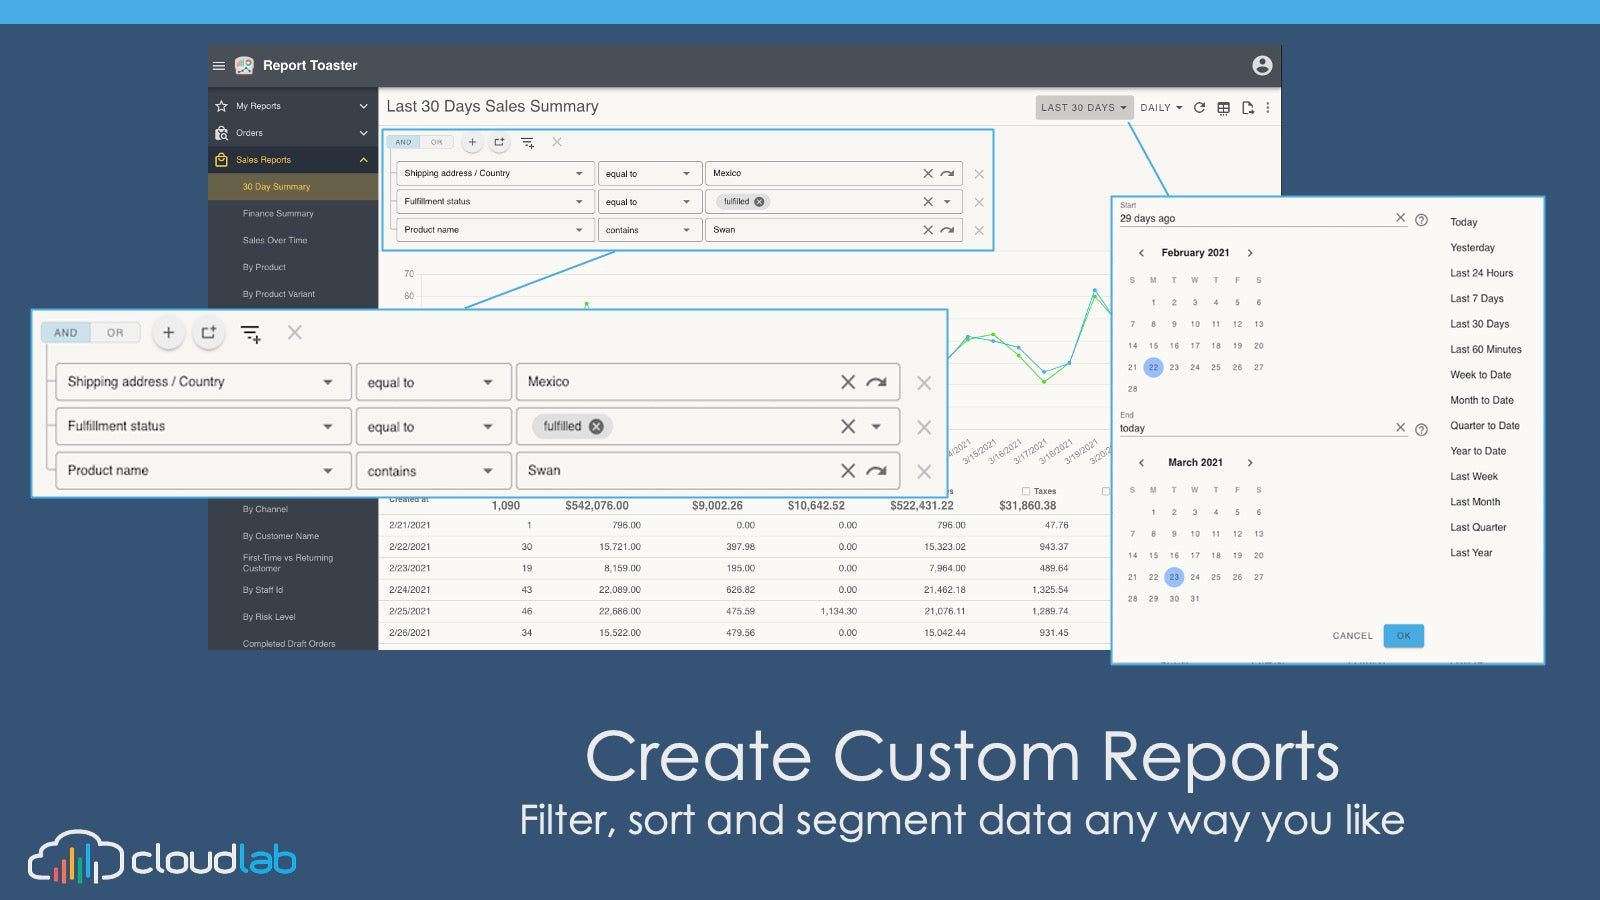 Create custom reports by filtering, sorting and segmenting data